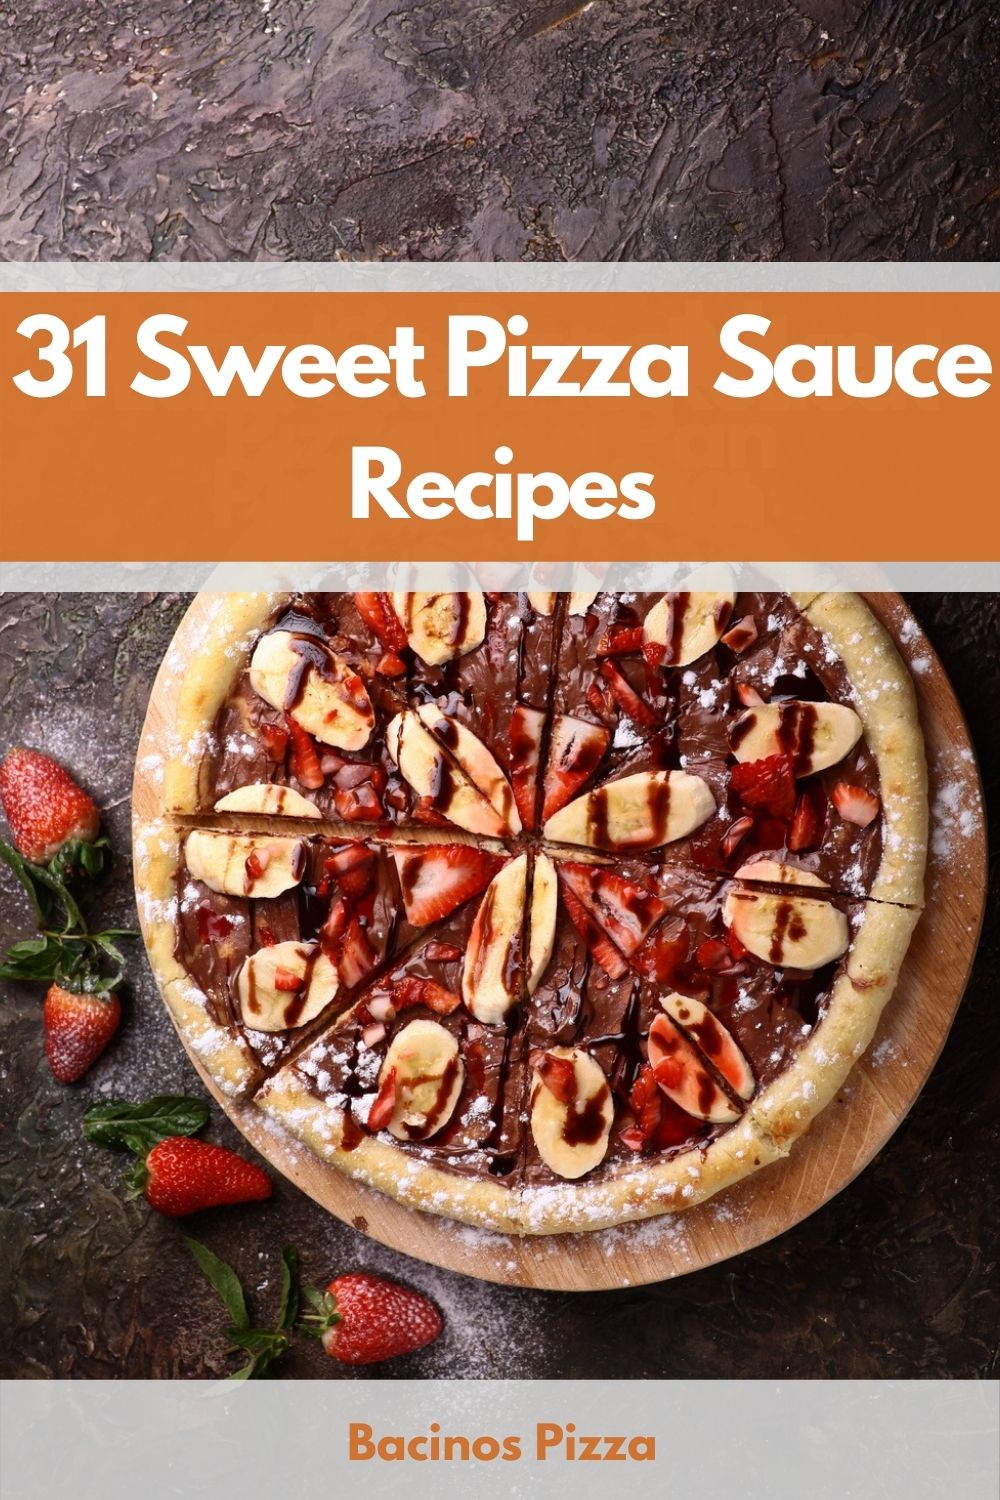 31 Sweet Pizza Sauce Recipes pin